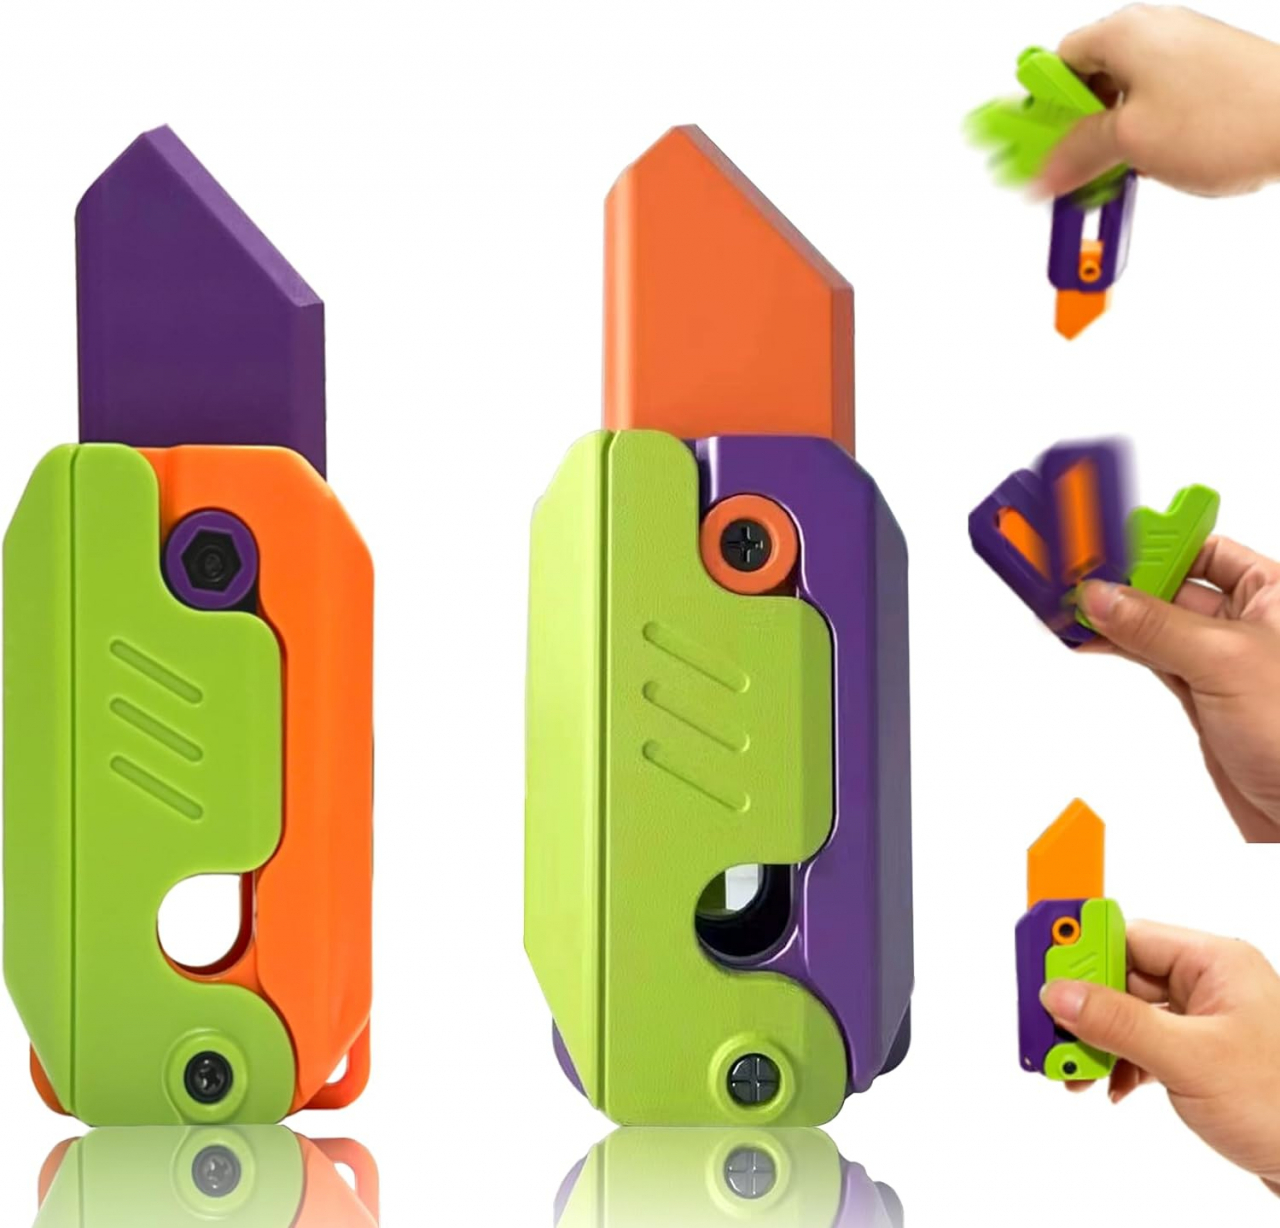 The fidget toy knife nicknamed 